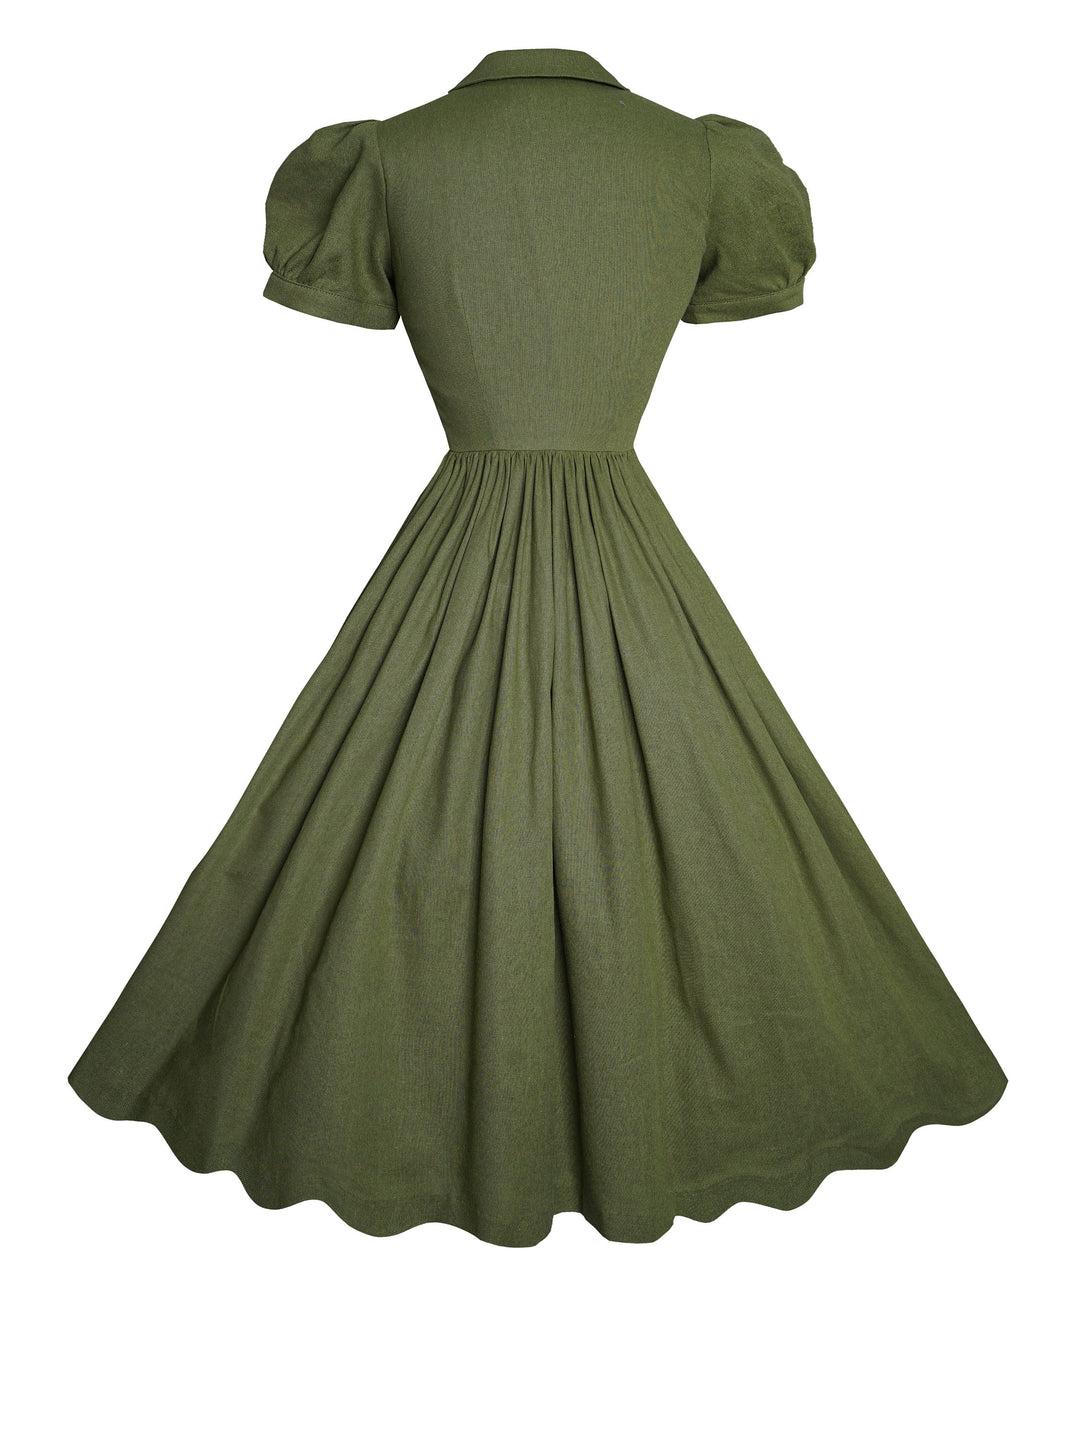 MTO - Judy Dress in Hunters Green Linen